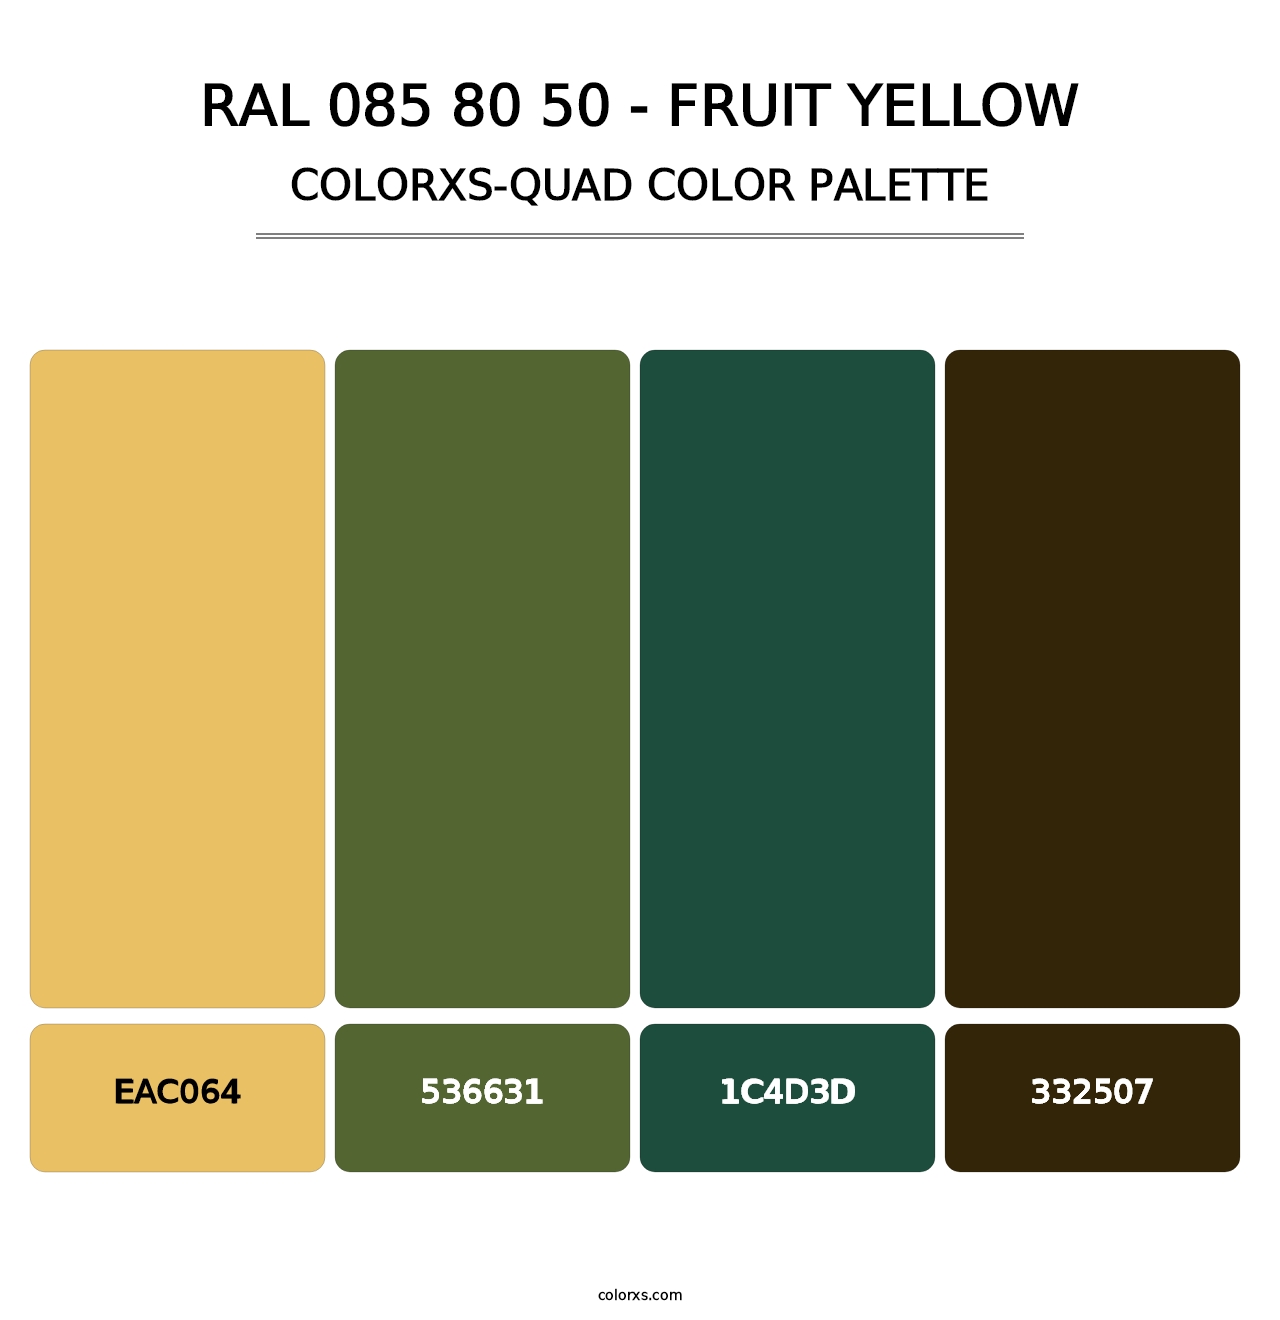 RAL 085 80 50 - Fruit Yellow - Colorxs Quad Palette